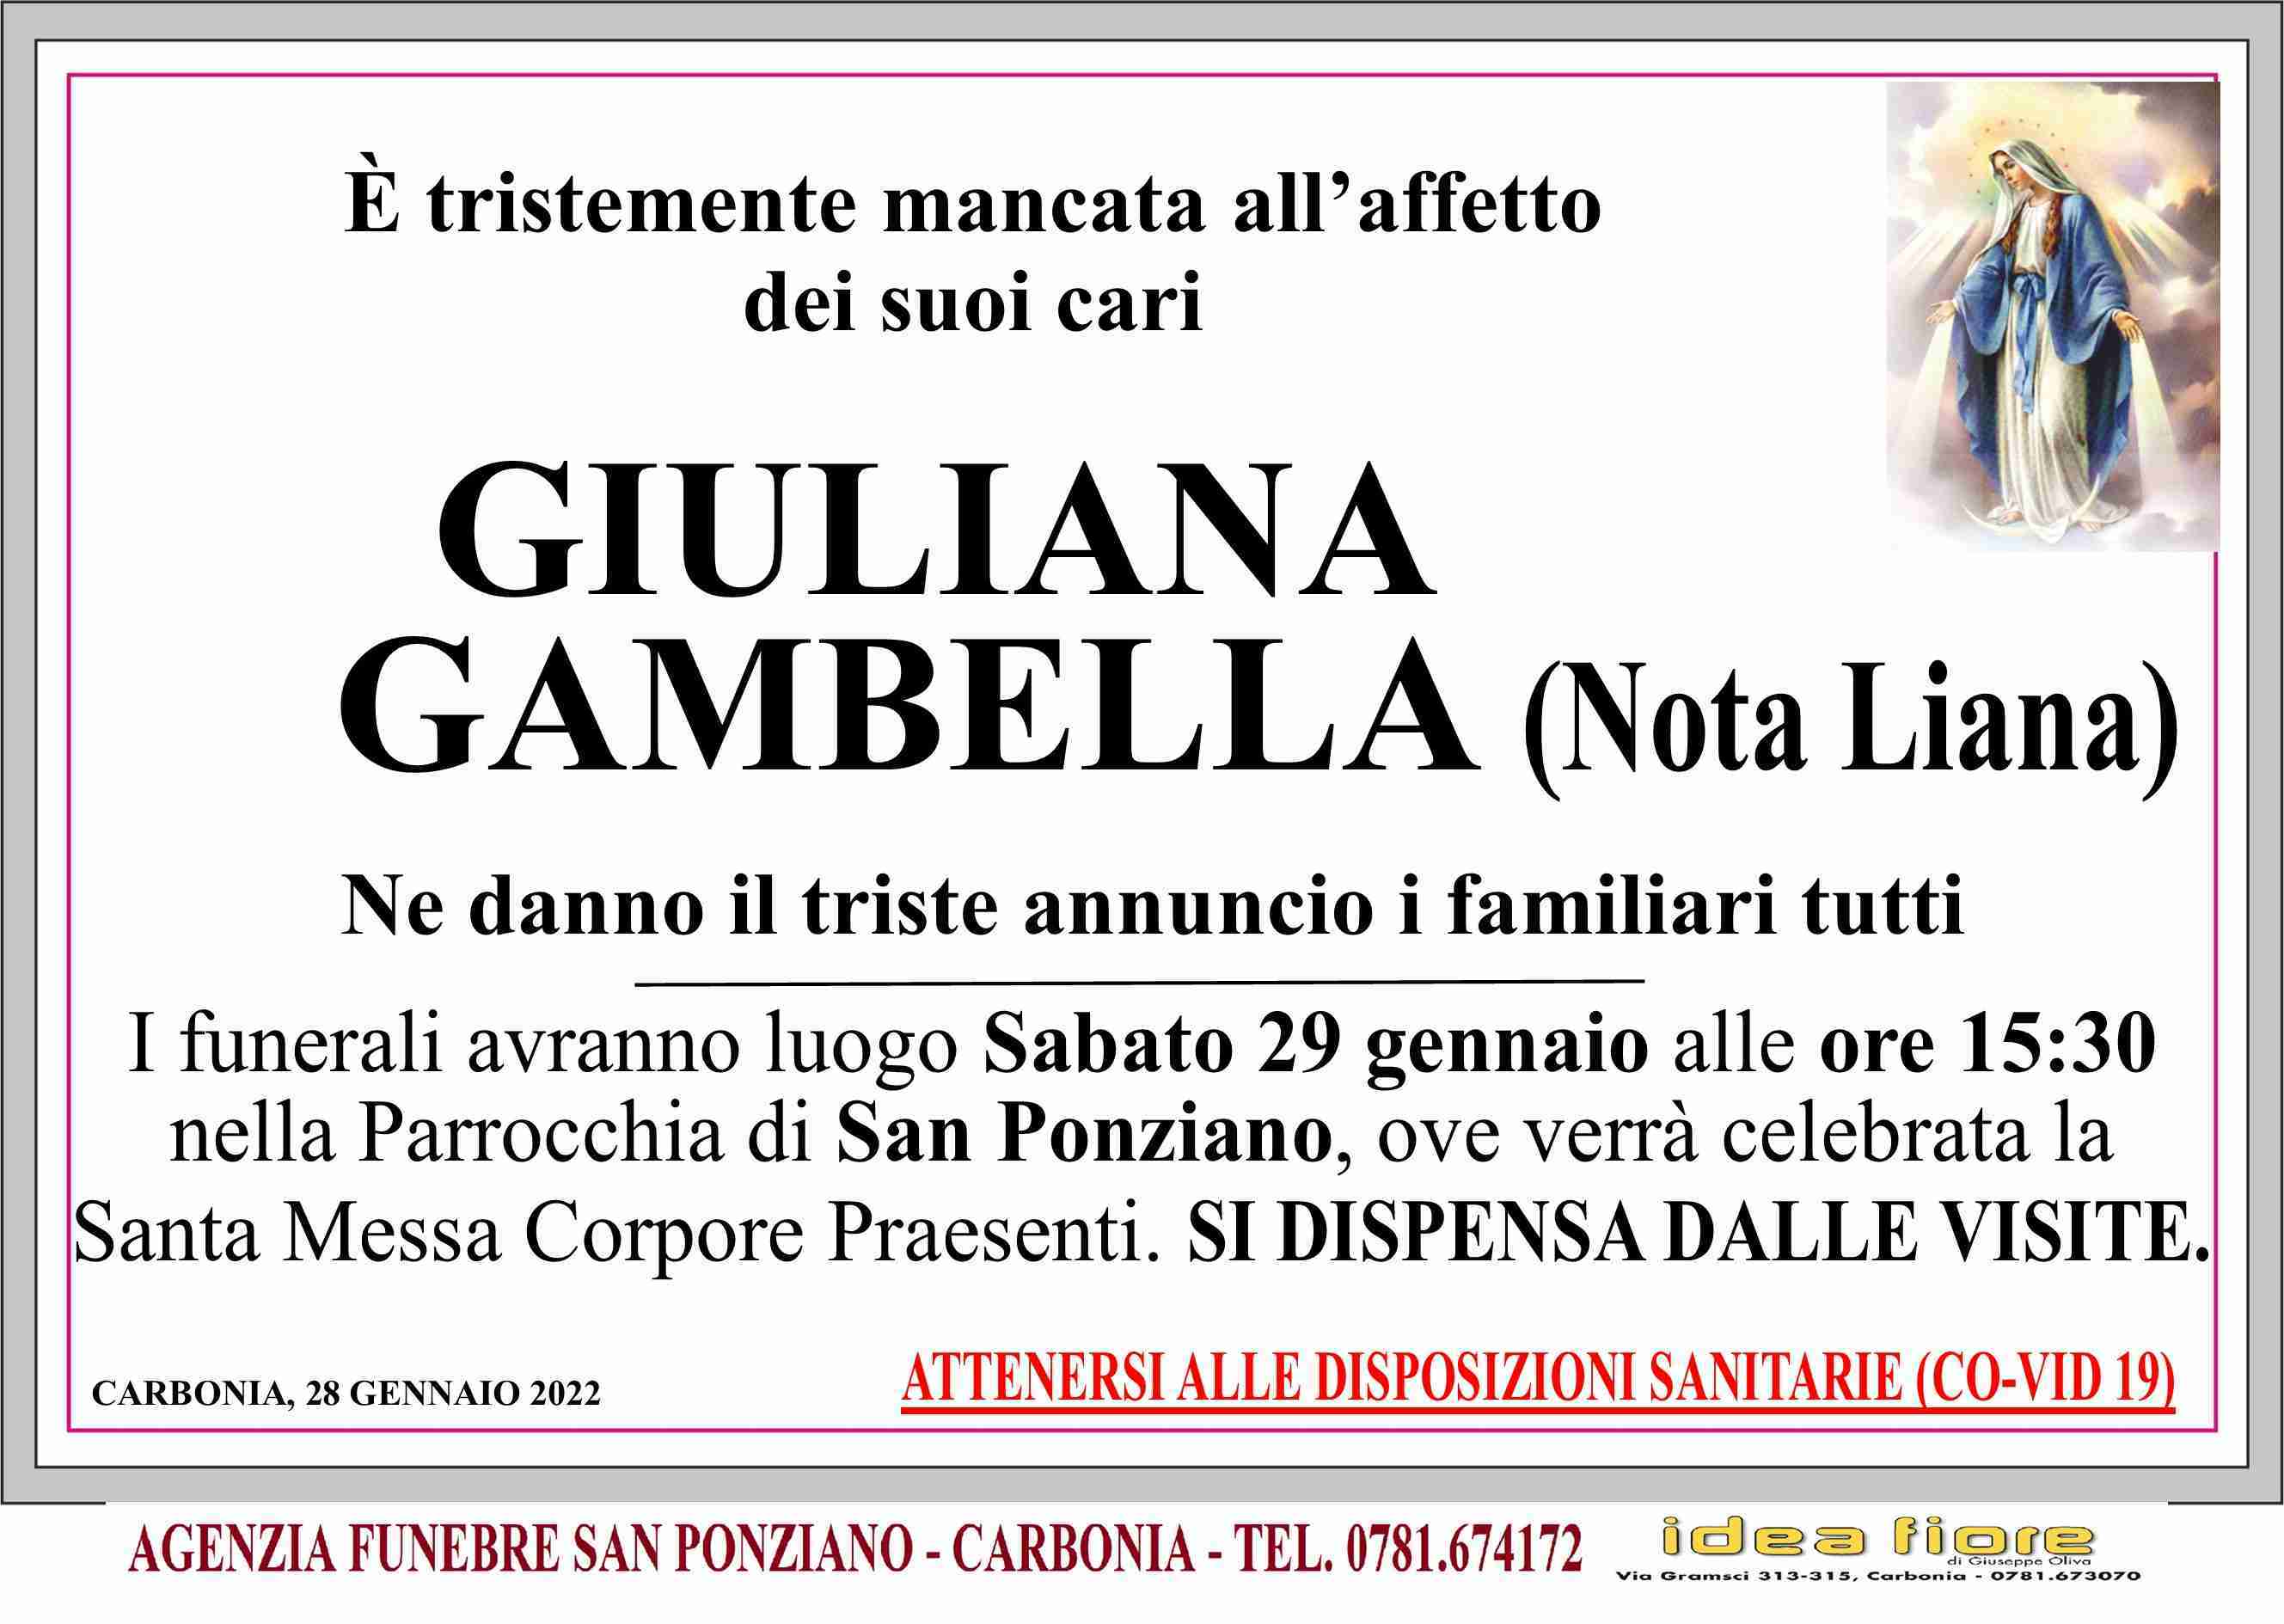 Giuliana Gambella